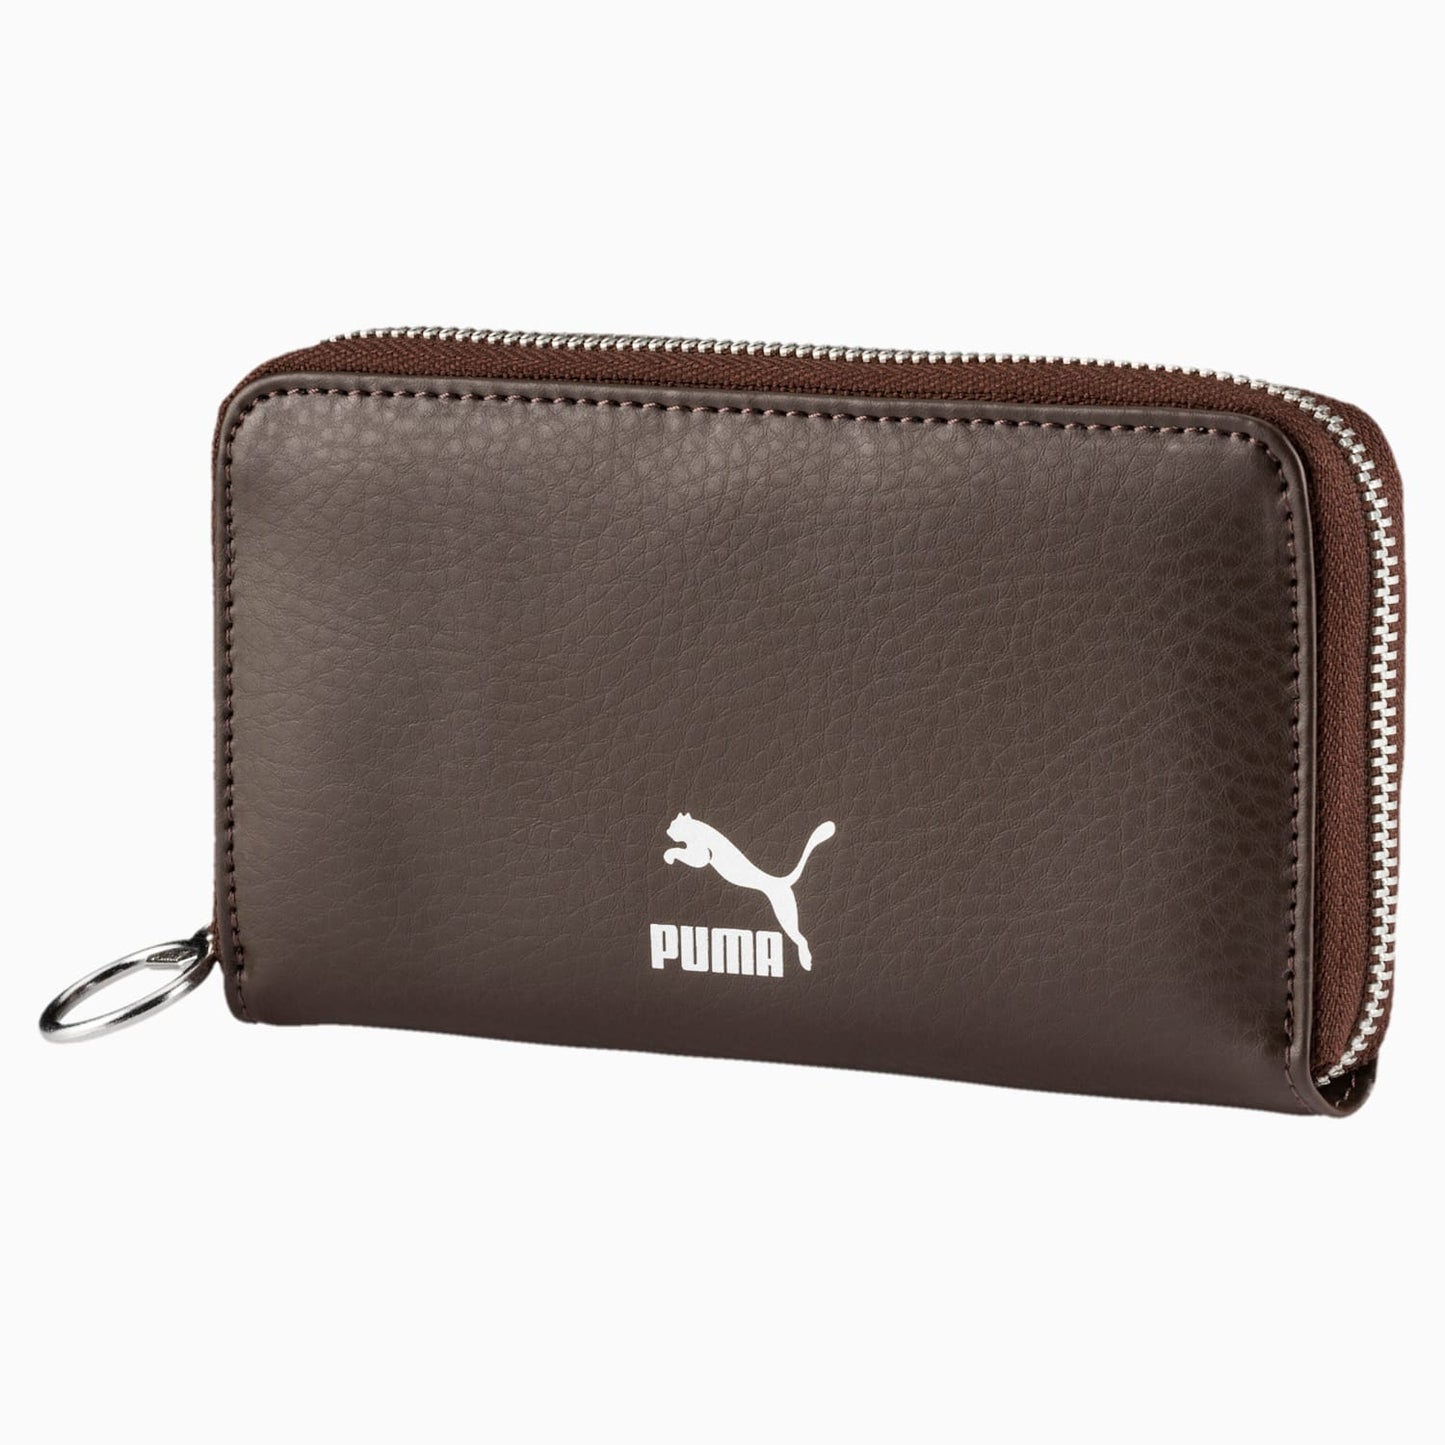 puma wallet-074604 02